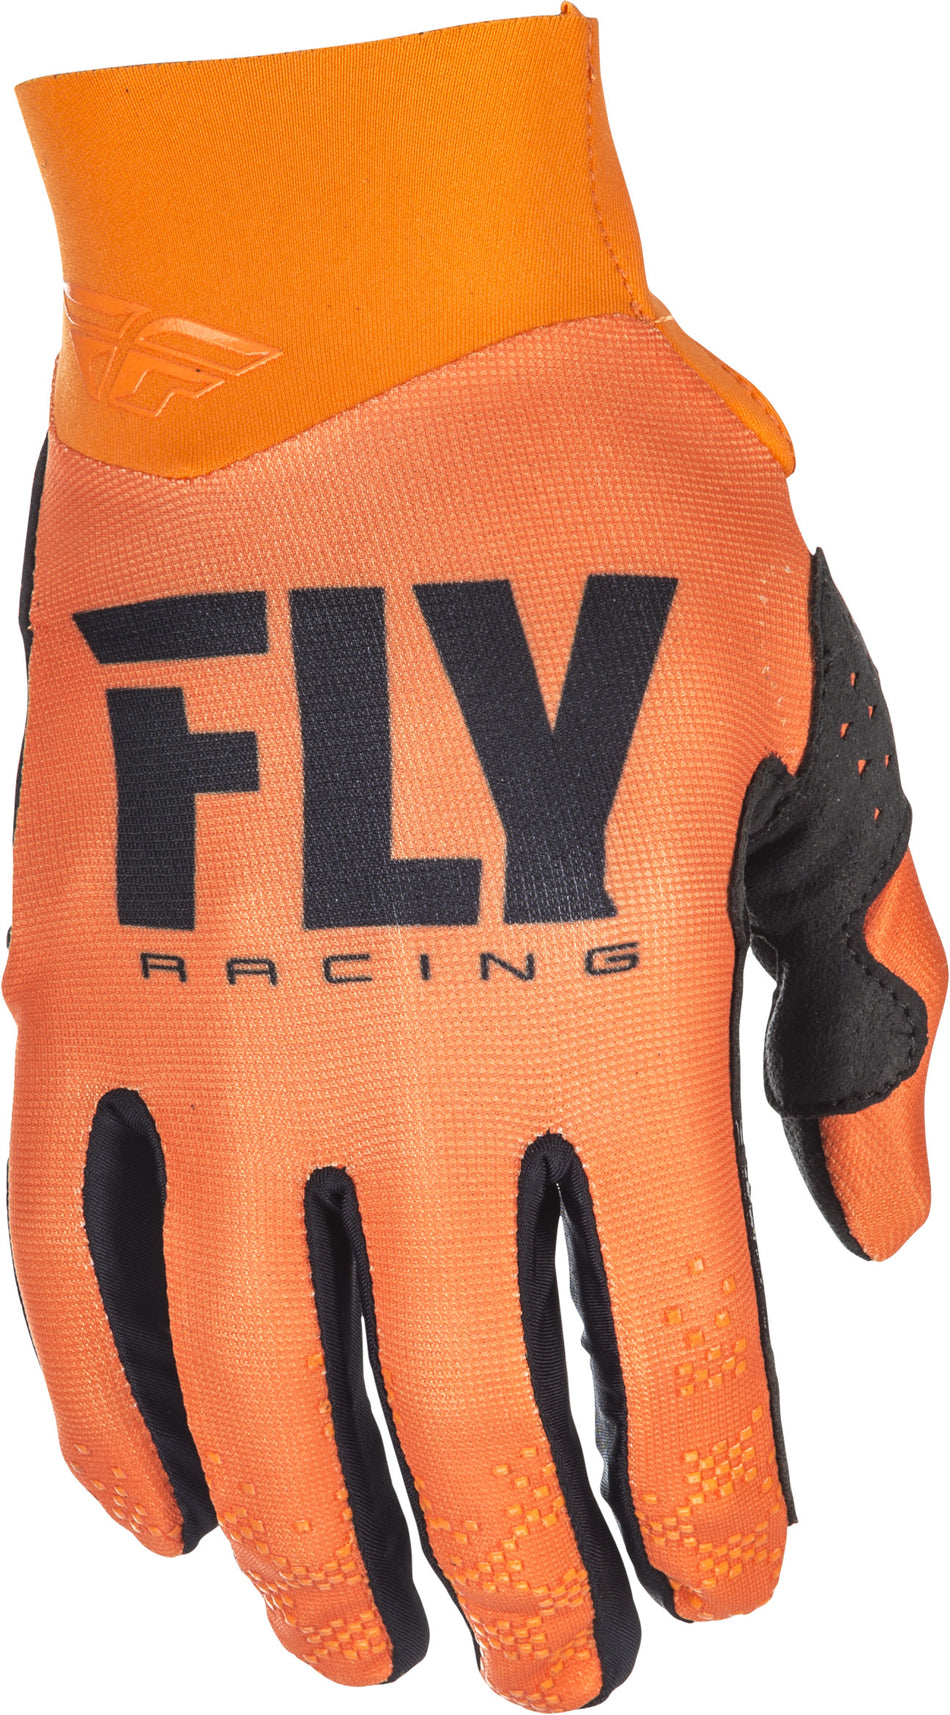 FLY RACING Pro Lite Gloves Orange Sz 13 371-81813